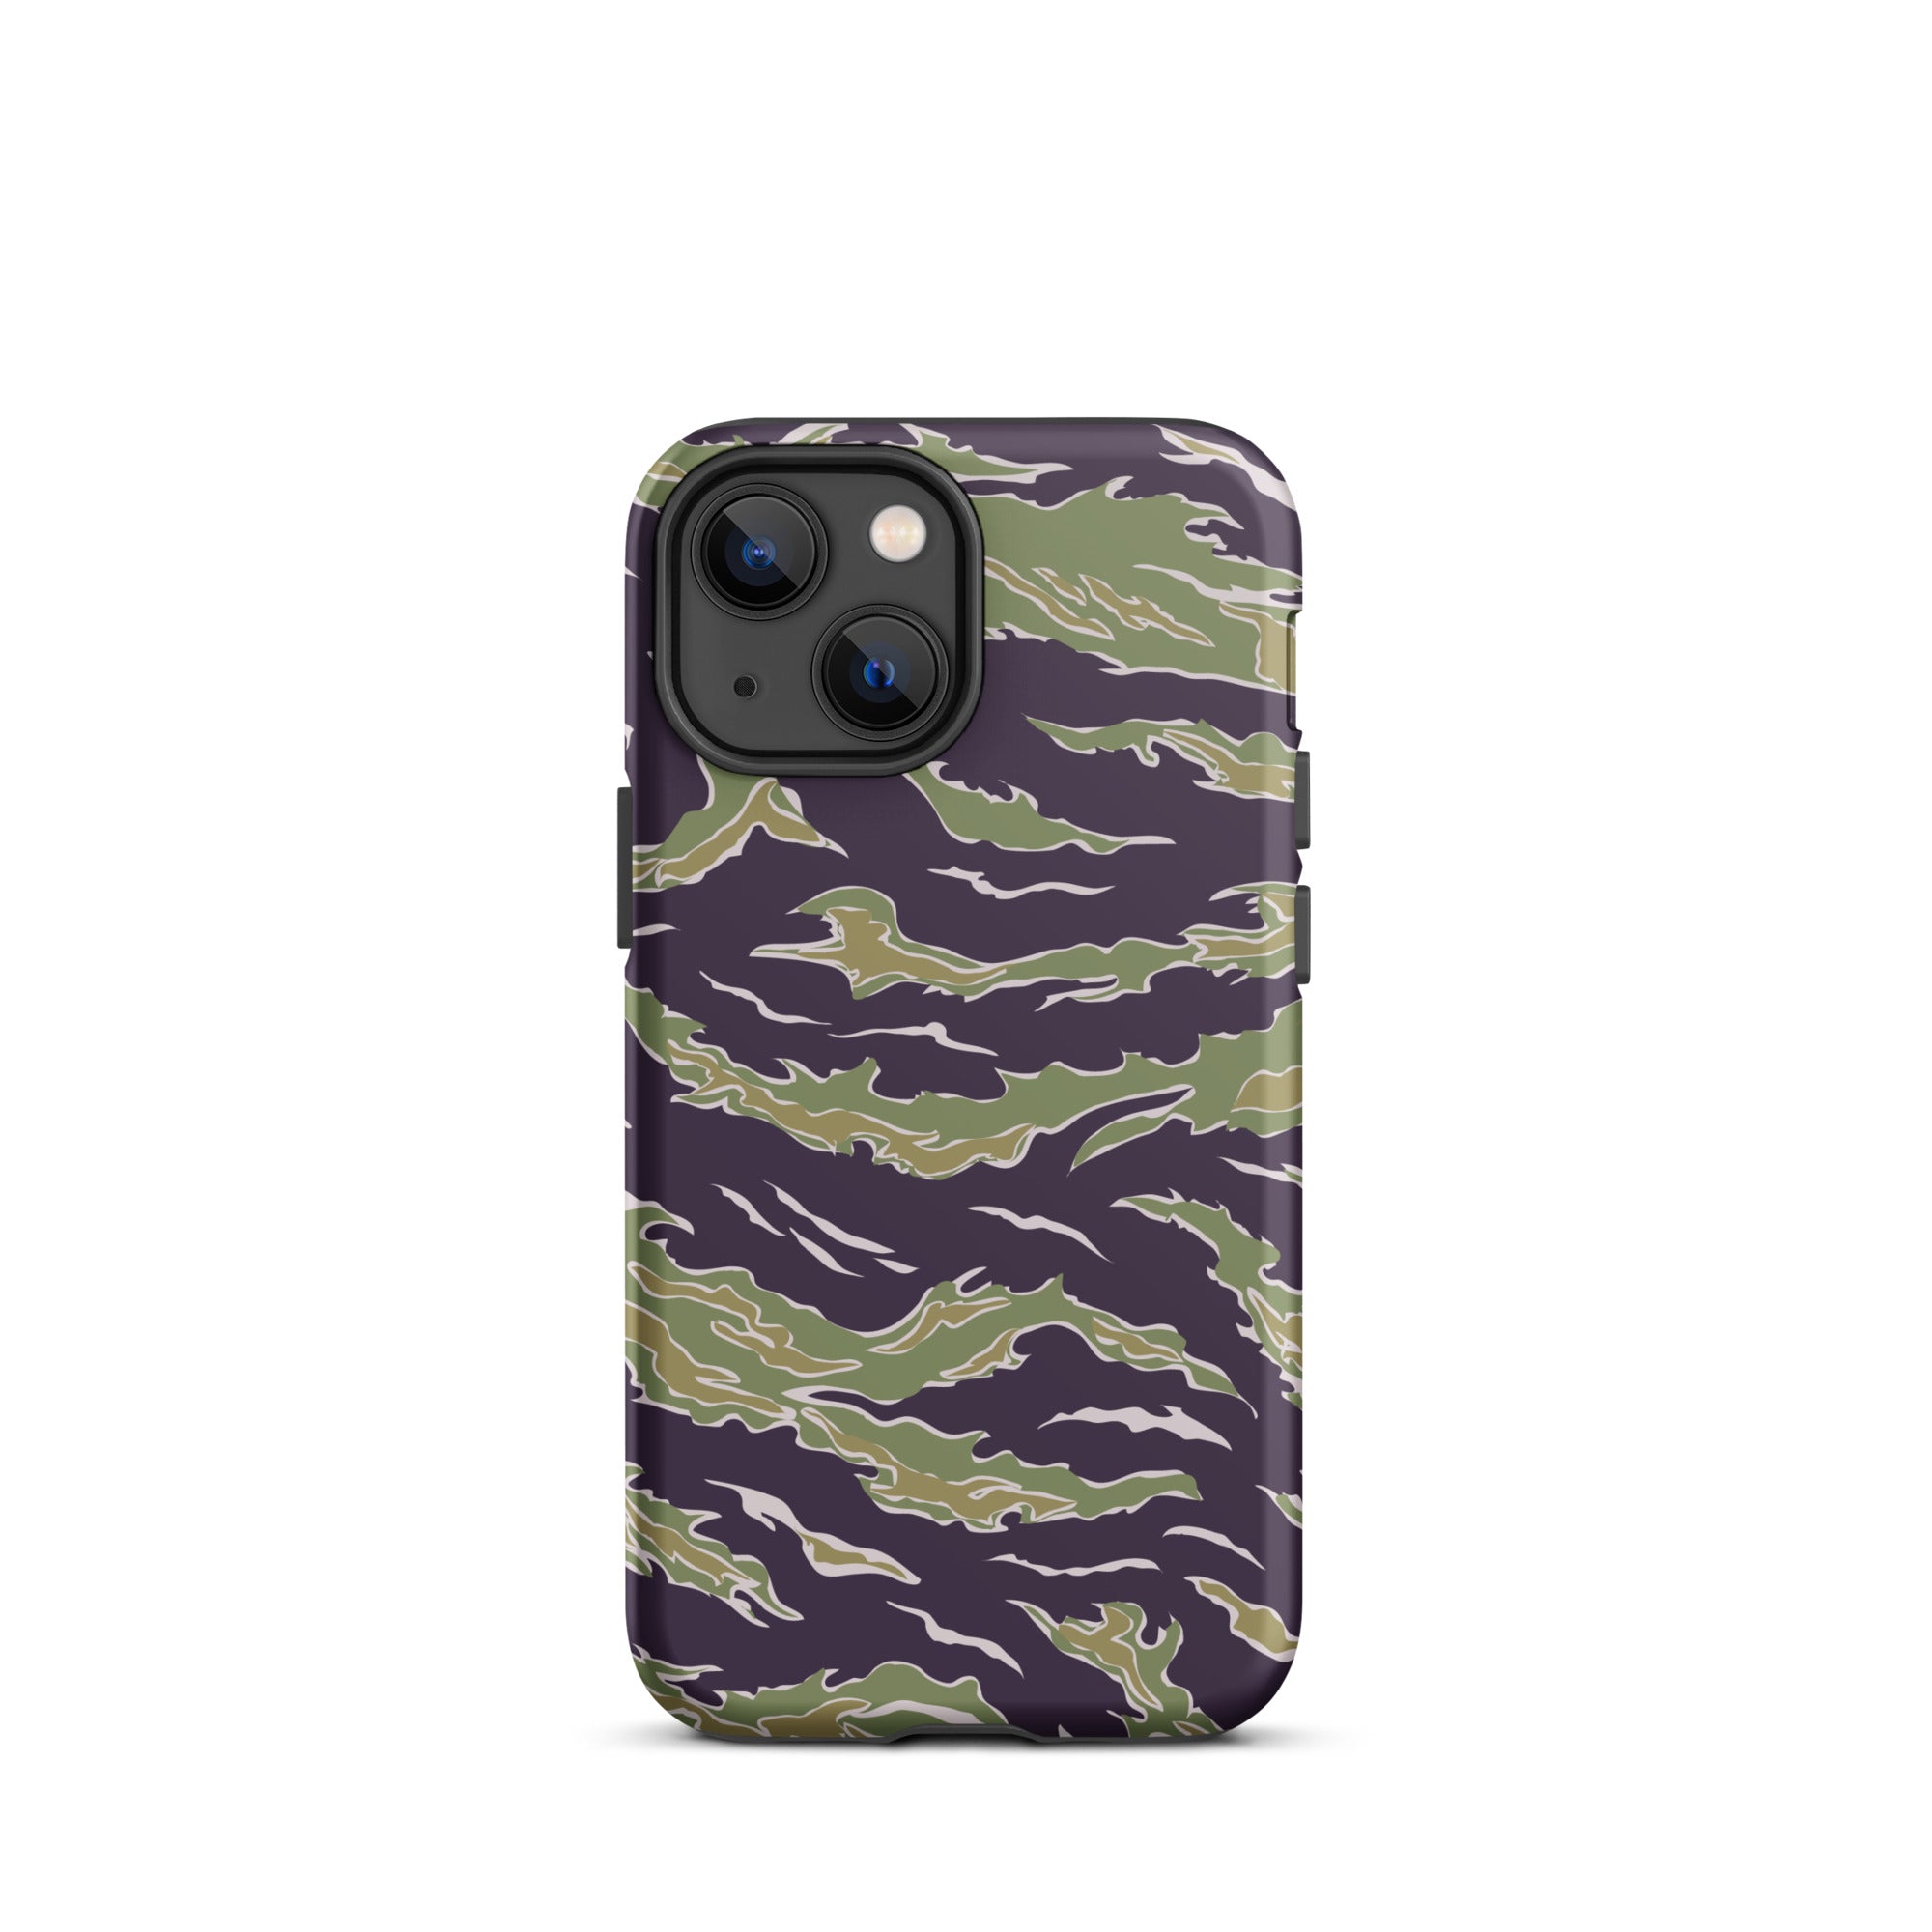 Tigerstripe Camo Tough iPhone case